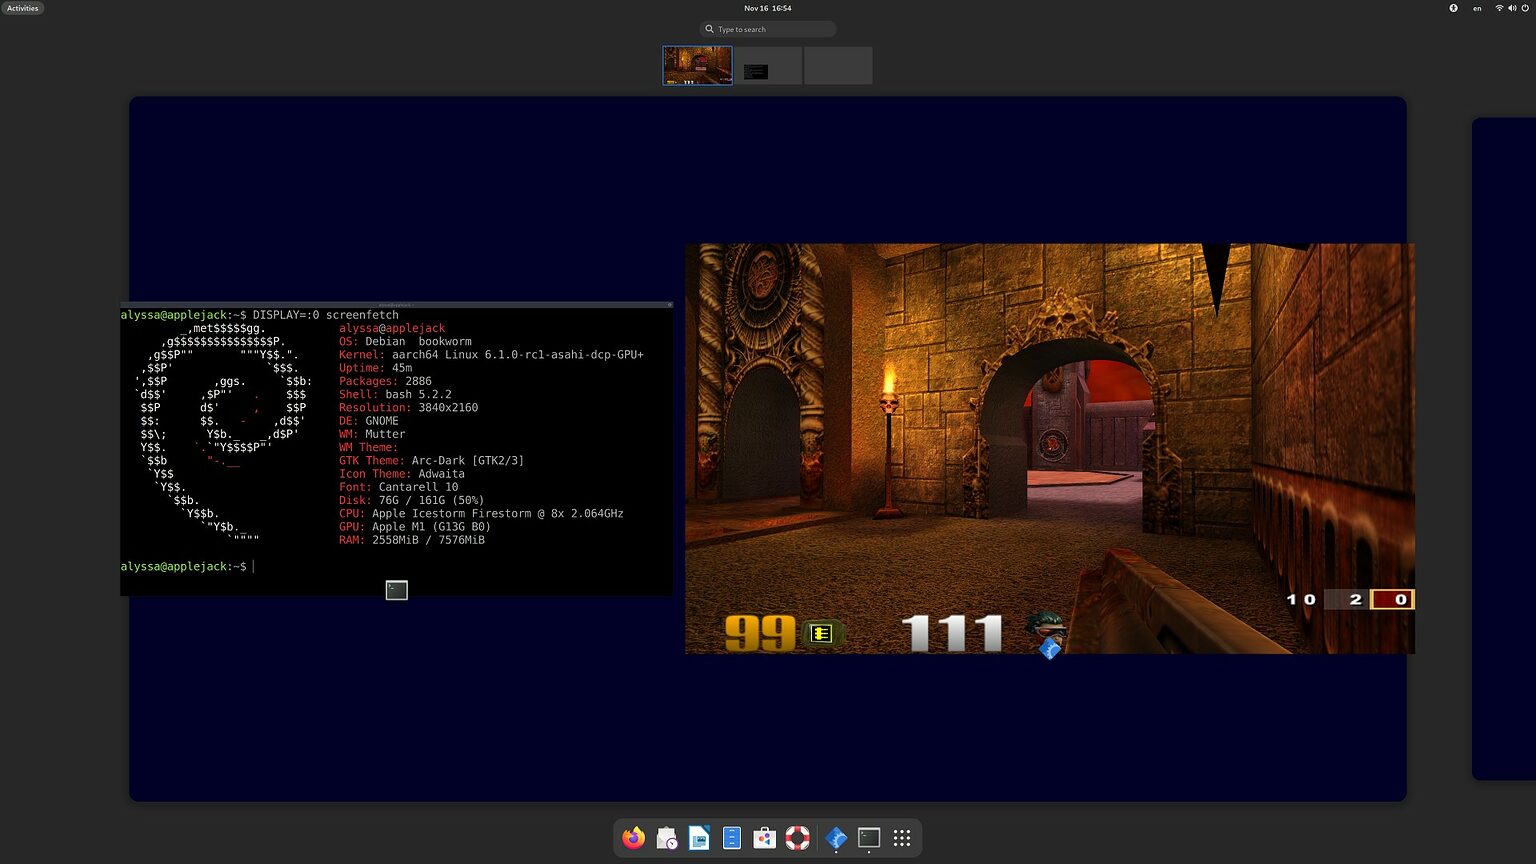 Quake 3 running in a Linux environment on an M1 Mac